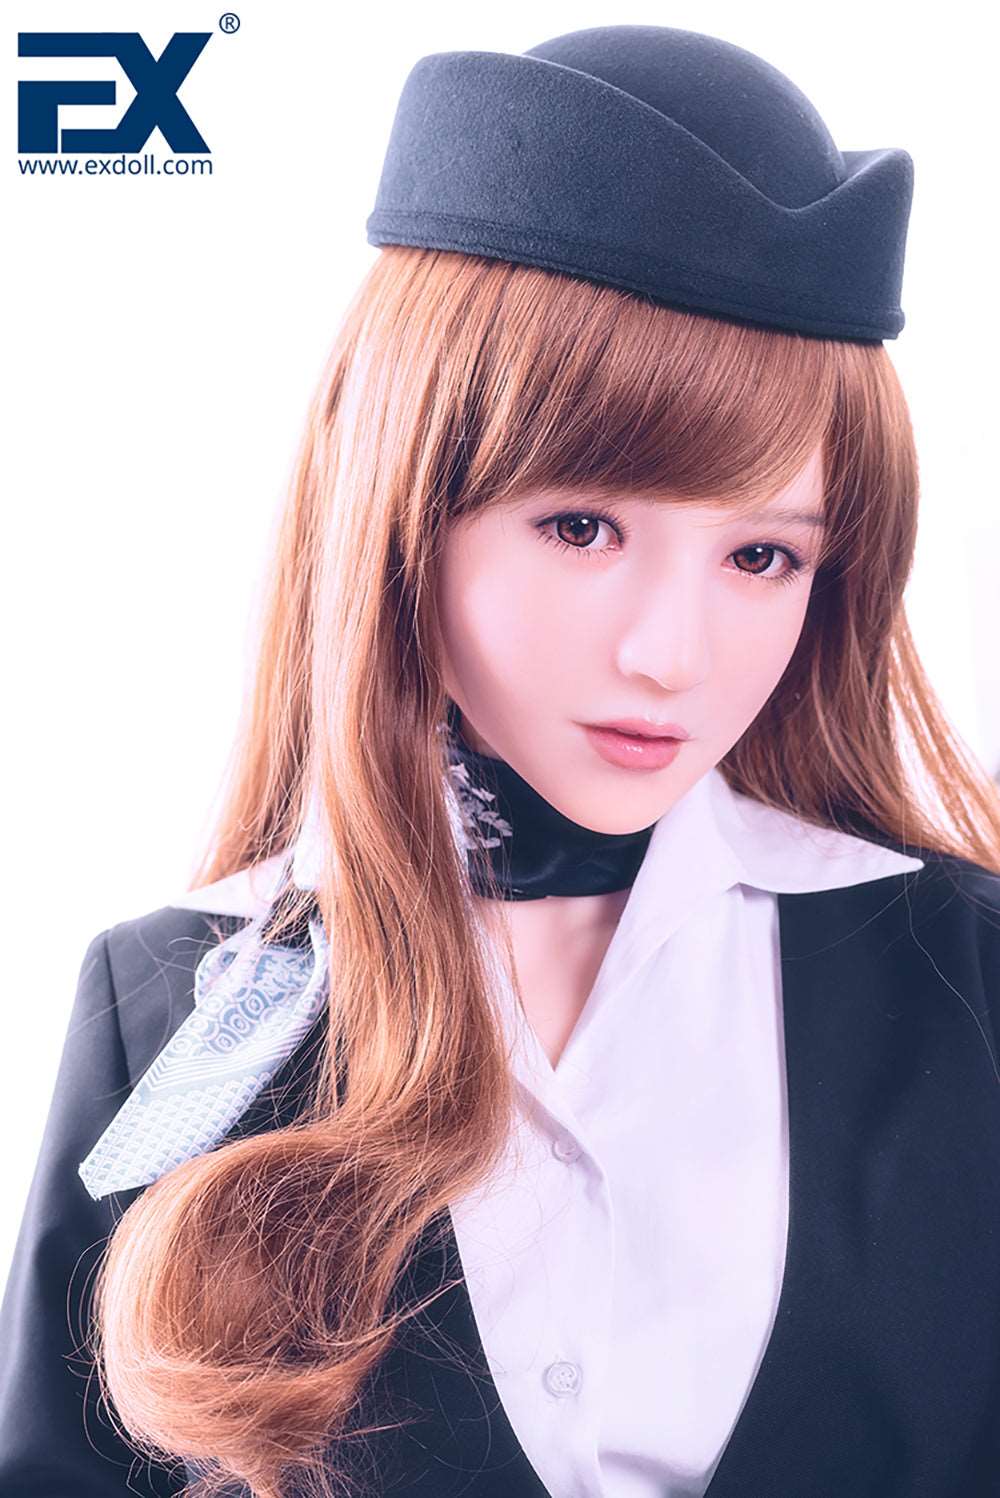 EX Doll Ukiyoe Series 170 cm Silicone - Yuan Yuan | Sex Dolls SG